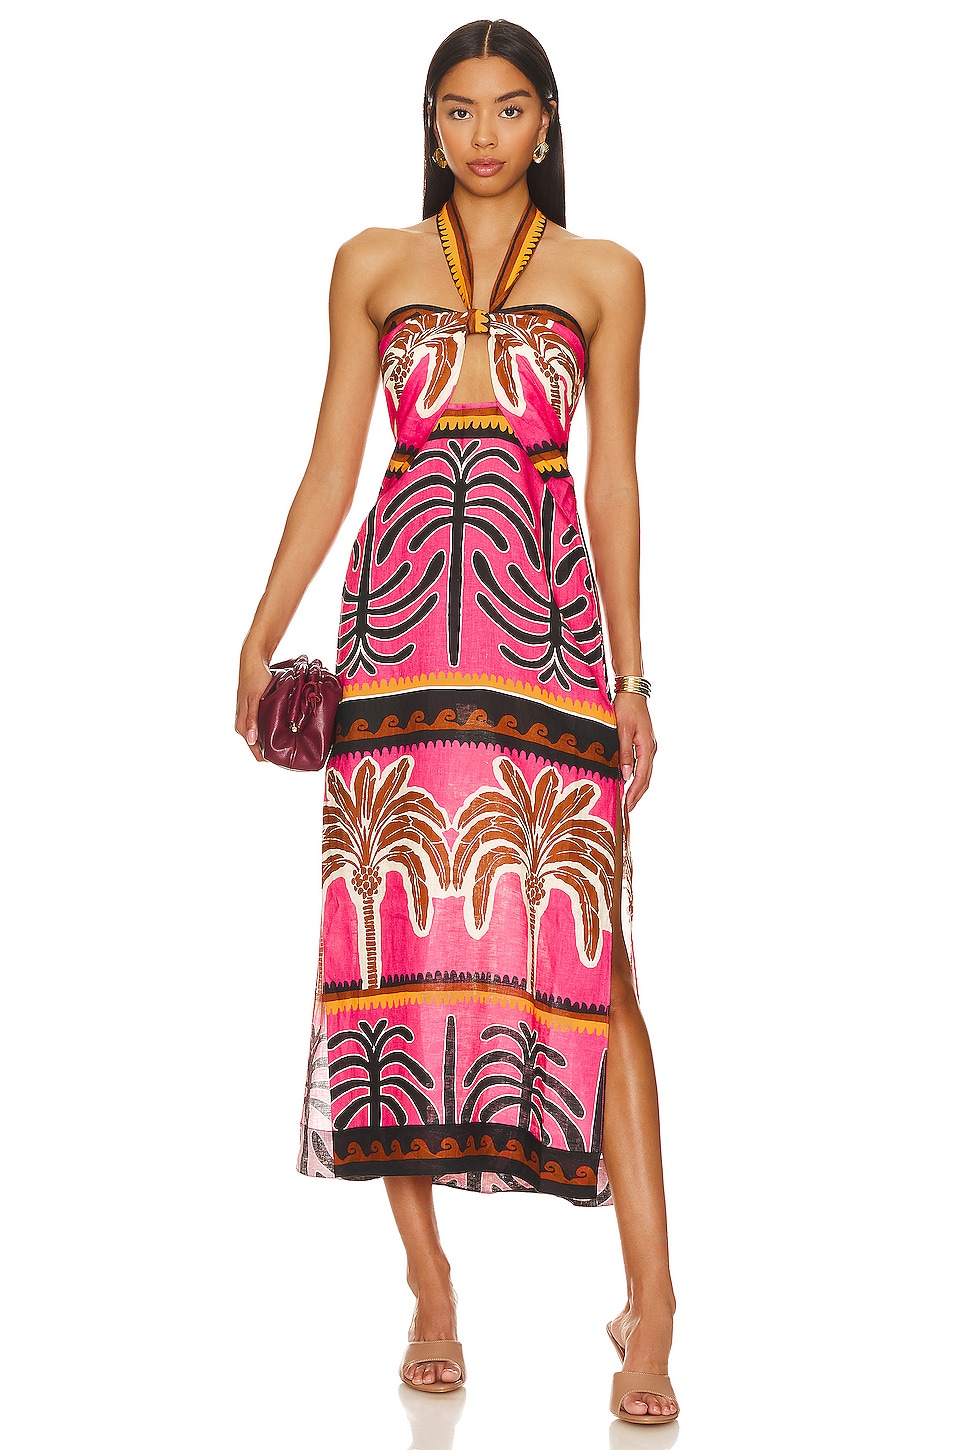 Johanna Ortiz Unexpected Symbolism Dress in Serengeti Pink